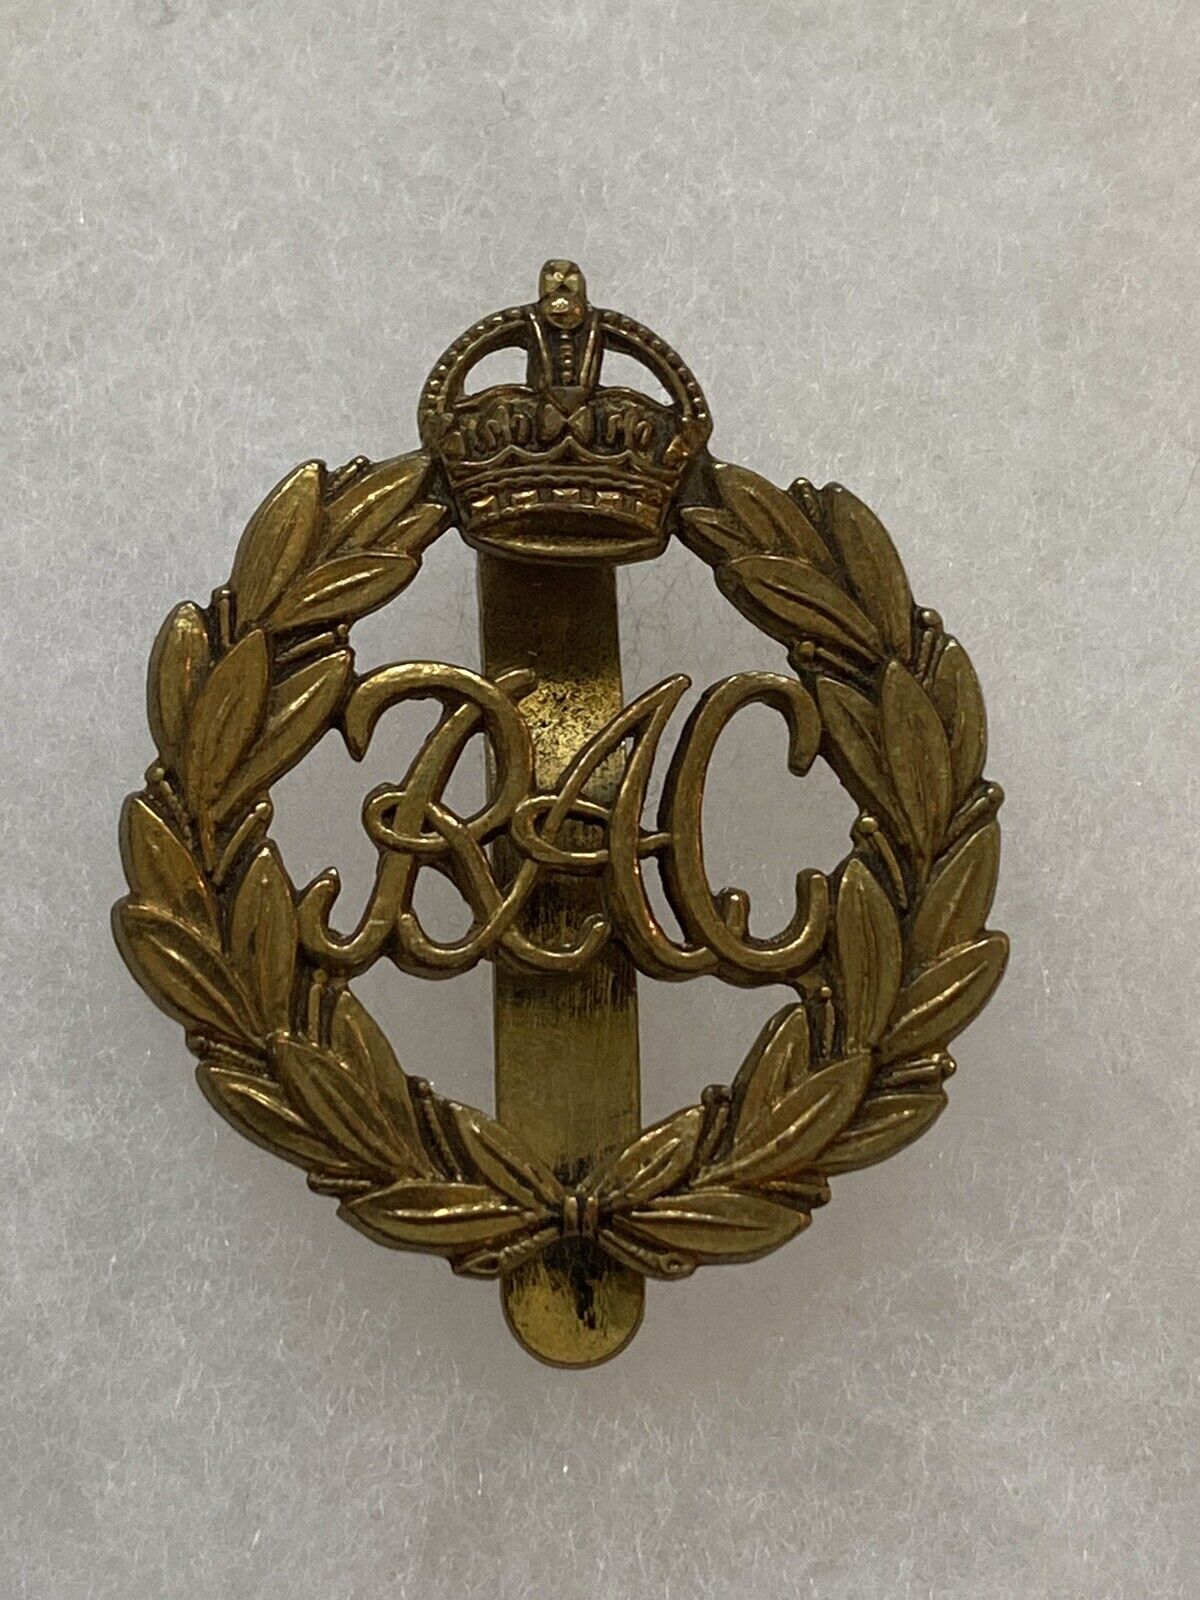 Genuine Royal Armoured Corps Cap Badge